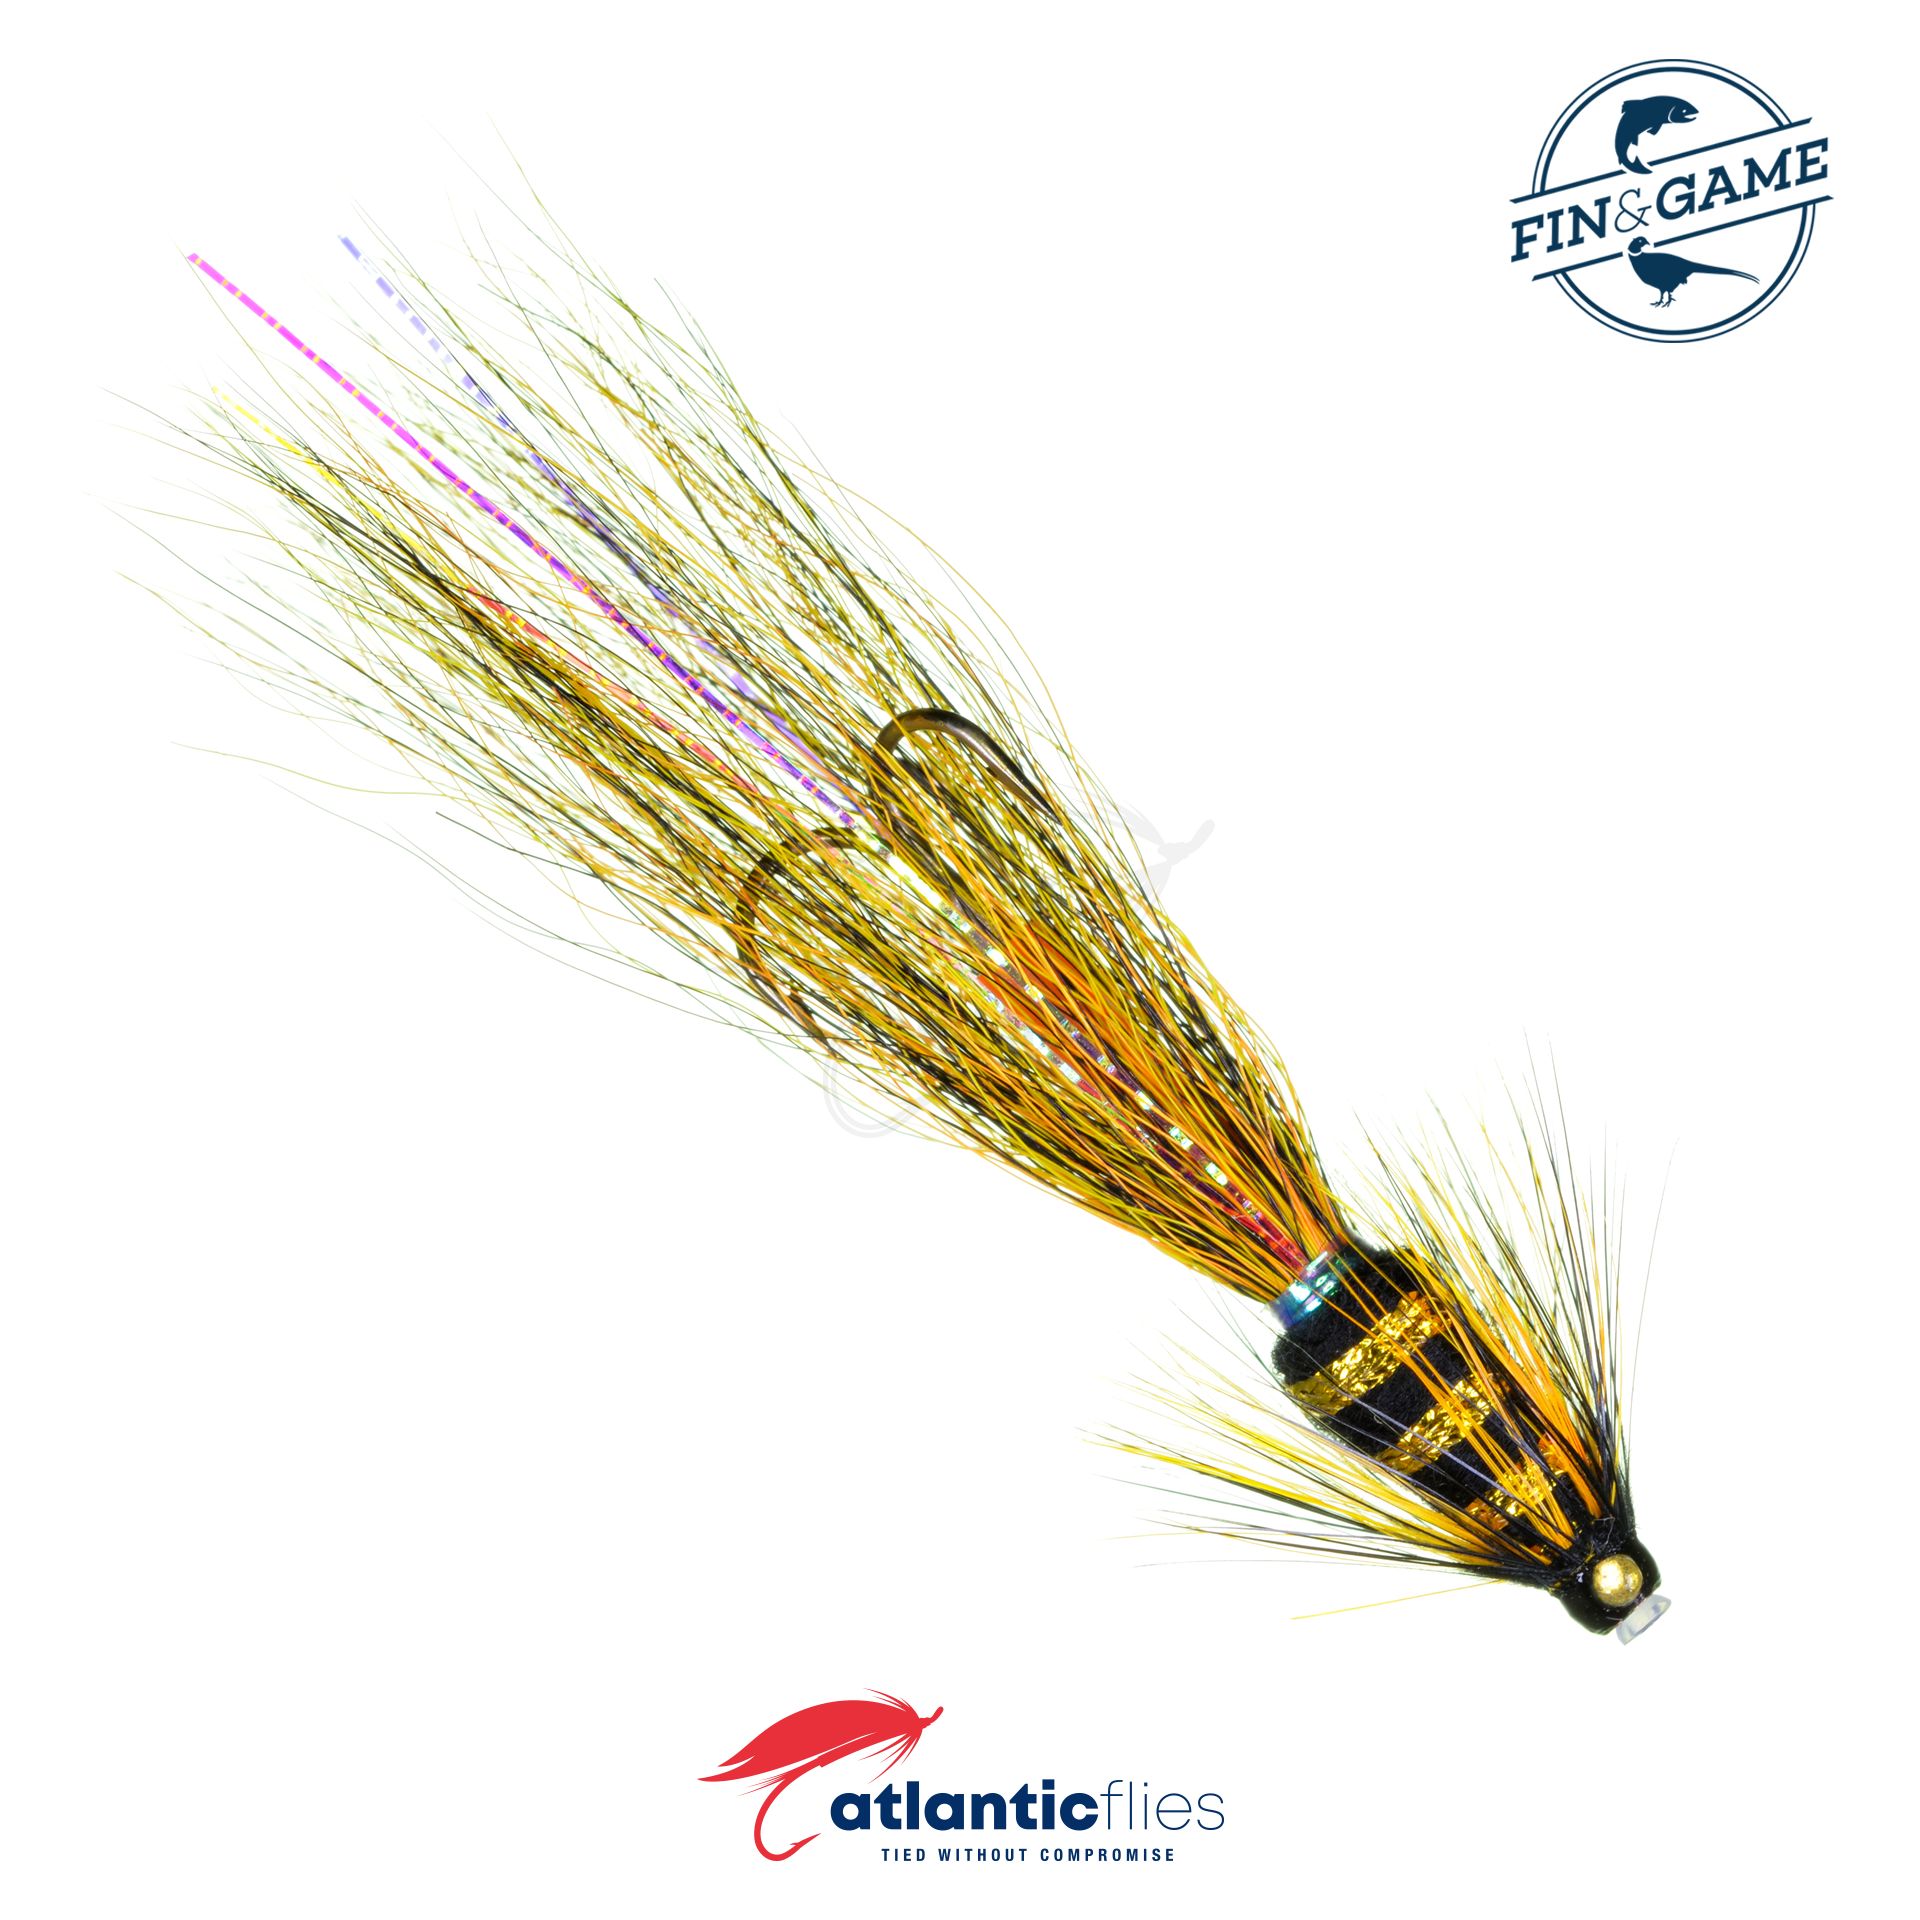 Atlantic Flies Sunburst Gold Snaelda Tube - Fin & Game